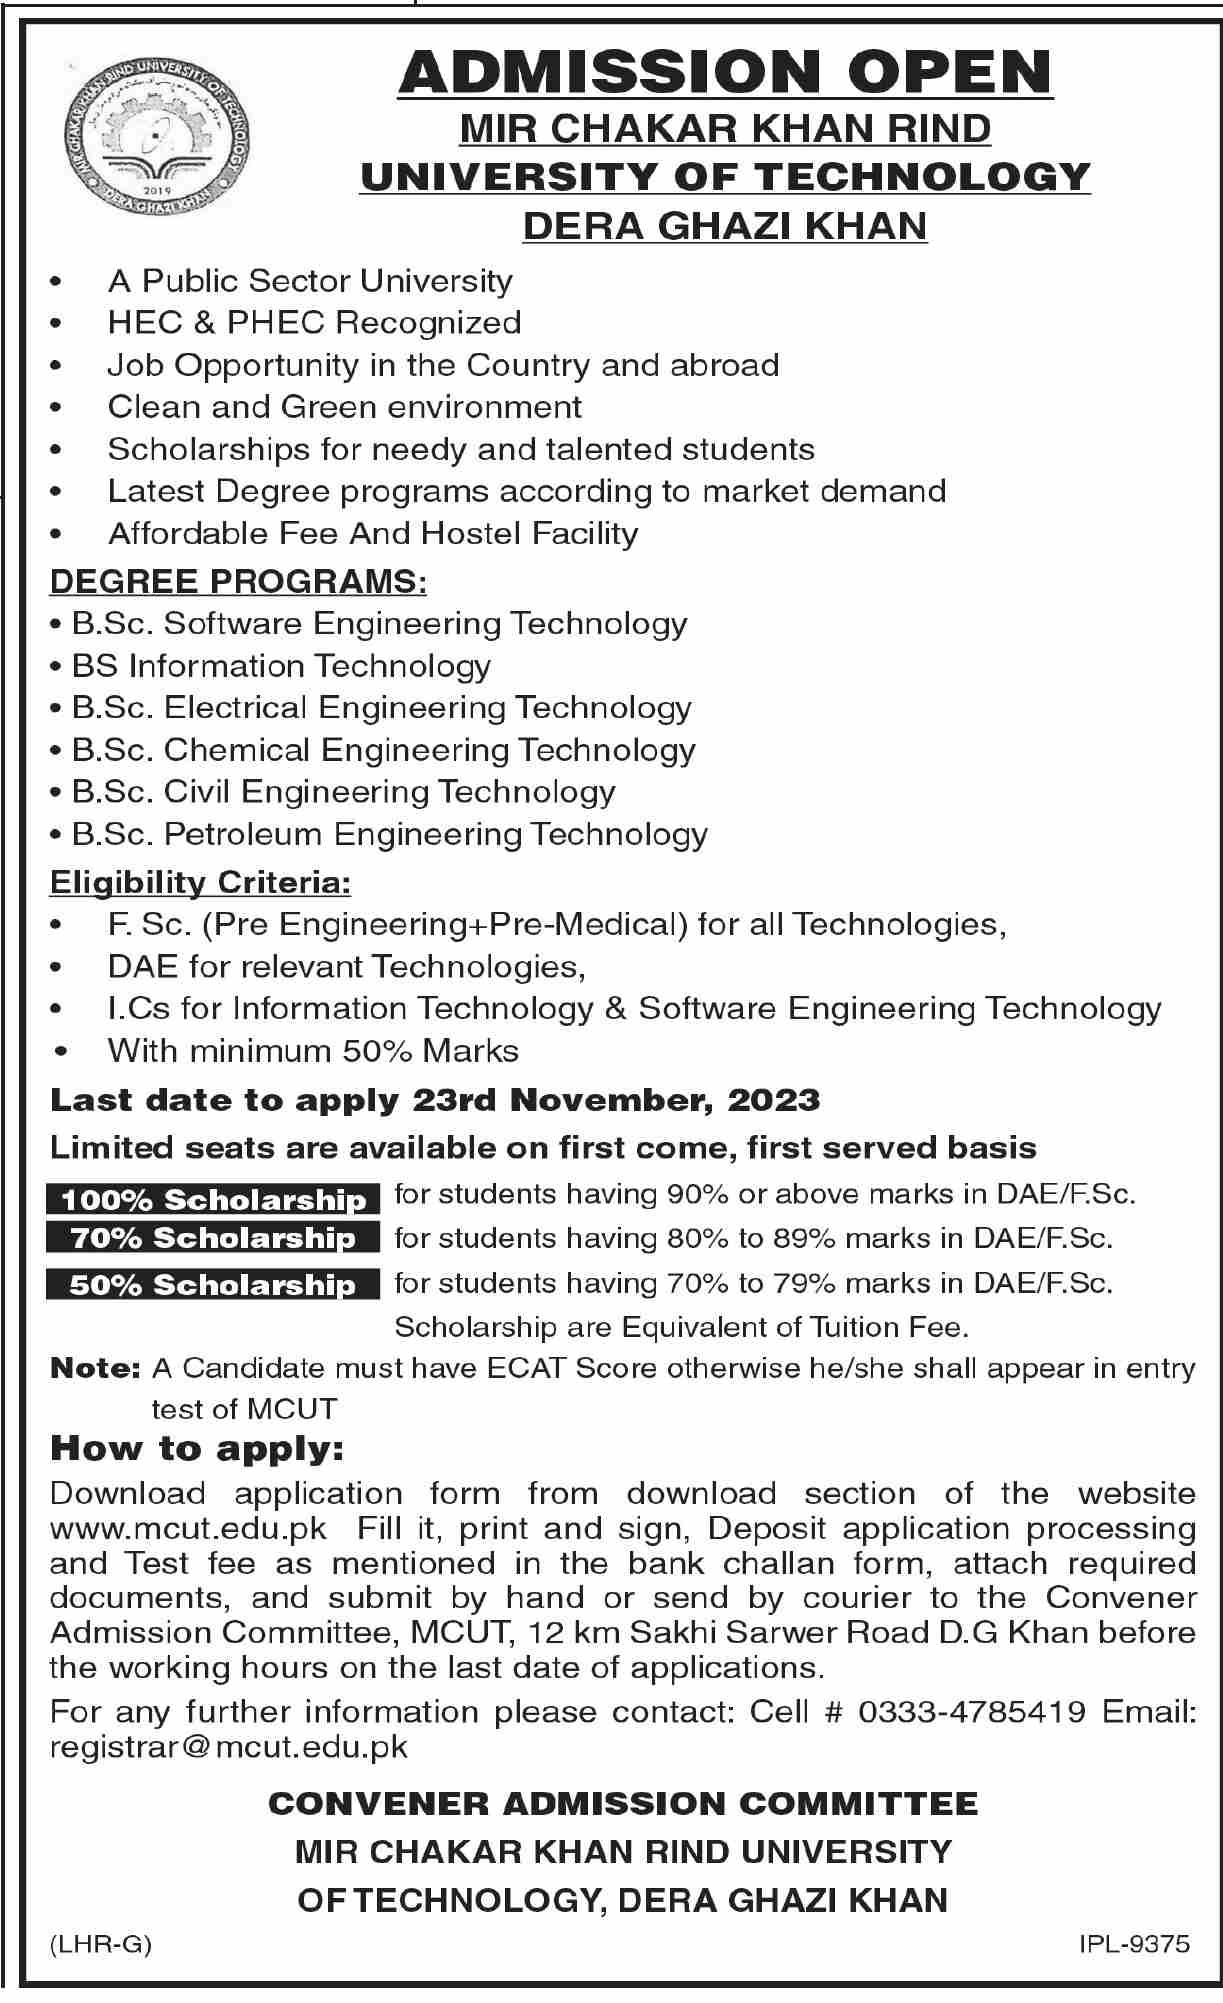 Mir Chakar Khan Rind University of Technology Dera Ghazi Khan Admissions 2023